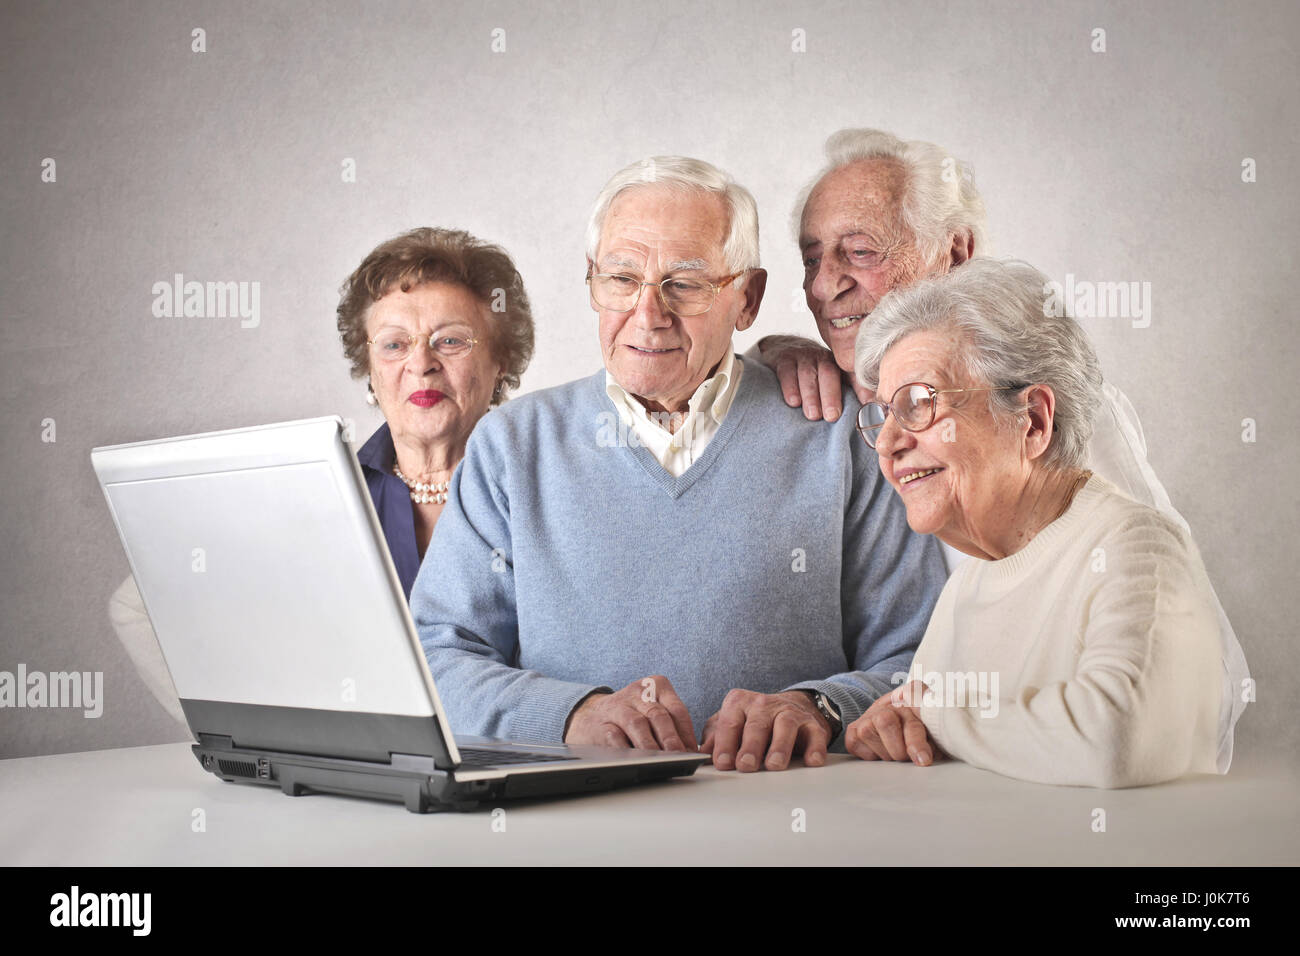 4 old people using laptop Stock Photo - Alamy